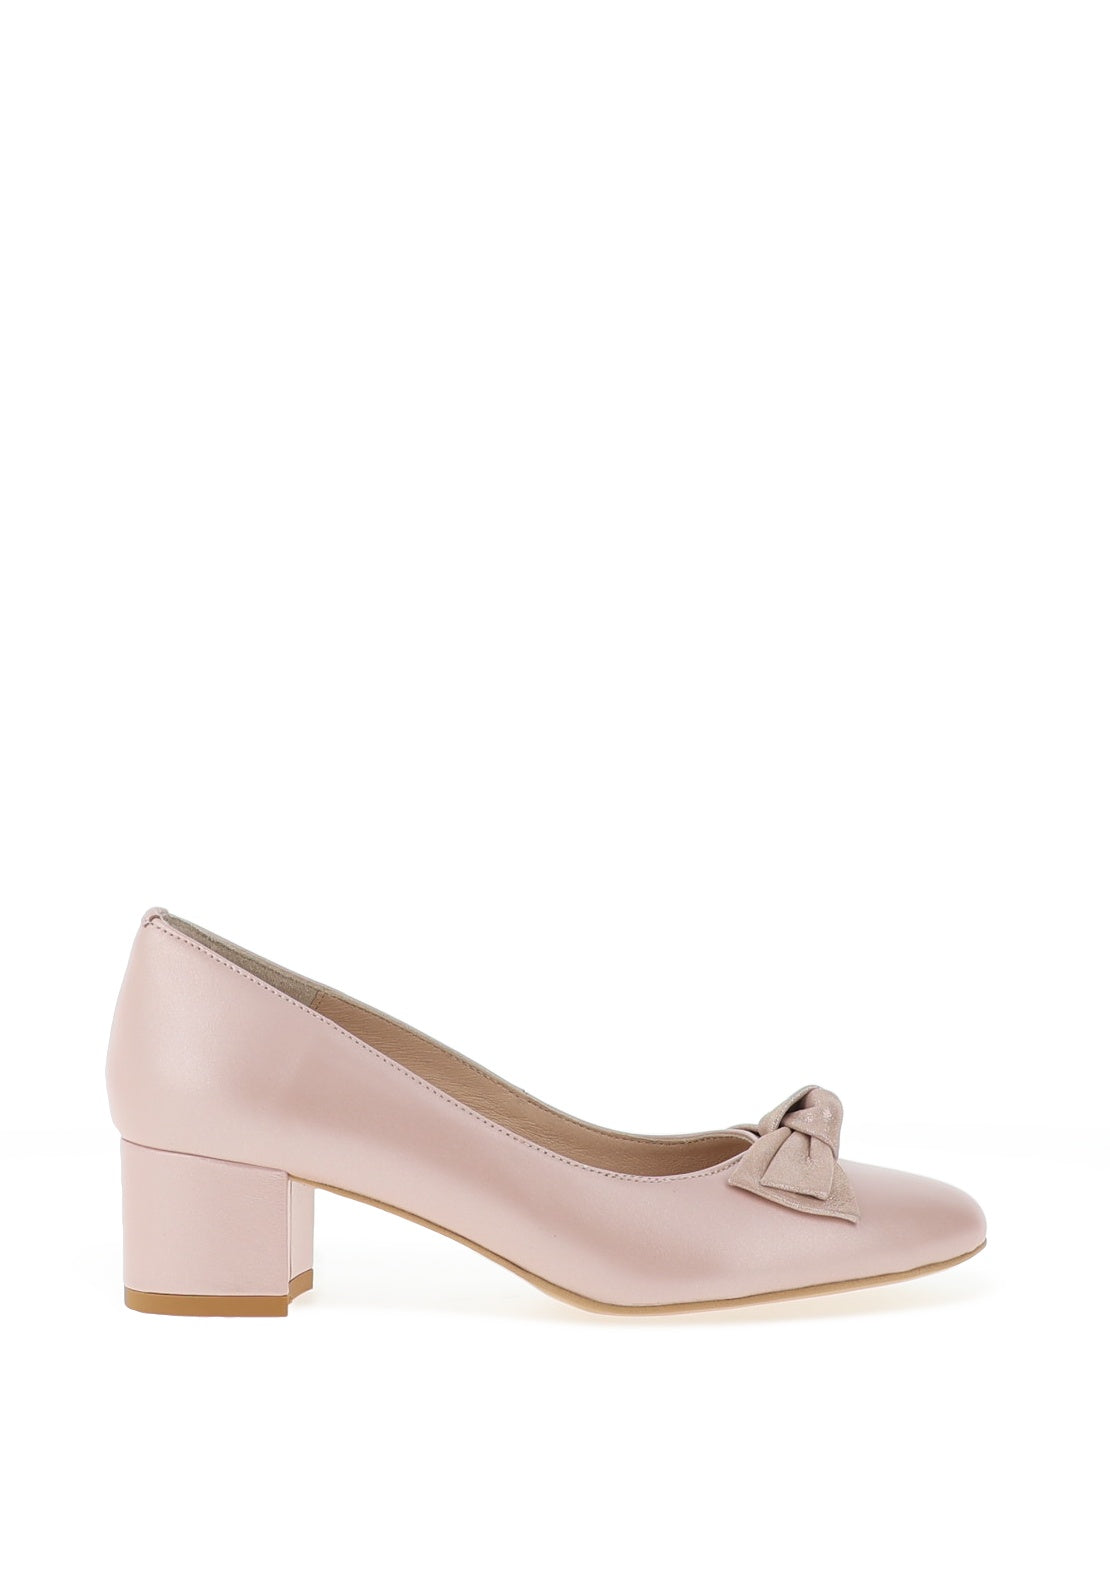 Emis Shimmer Leather Block Heel Shoes, Pearl Pink - McElhinneys